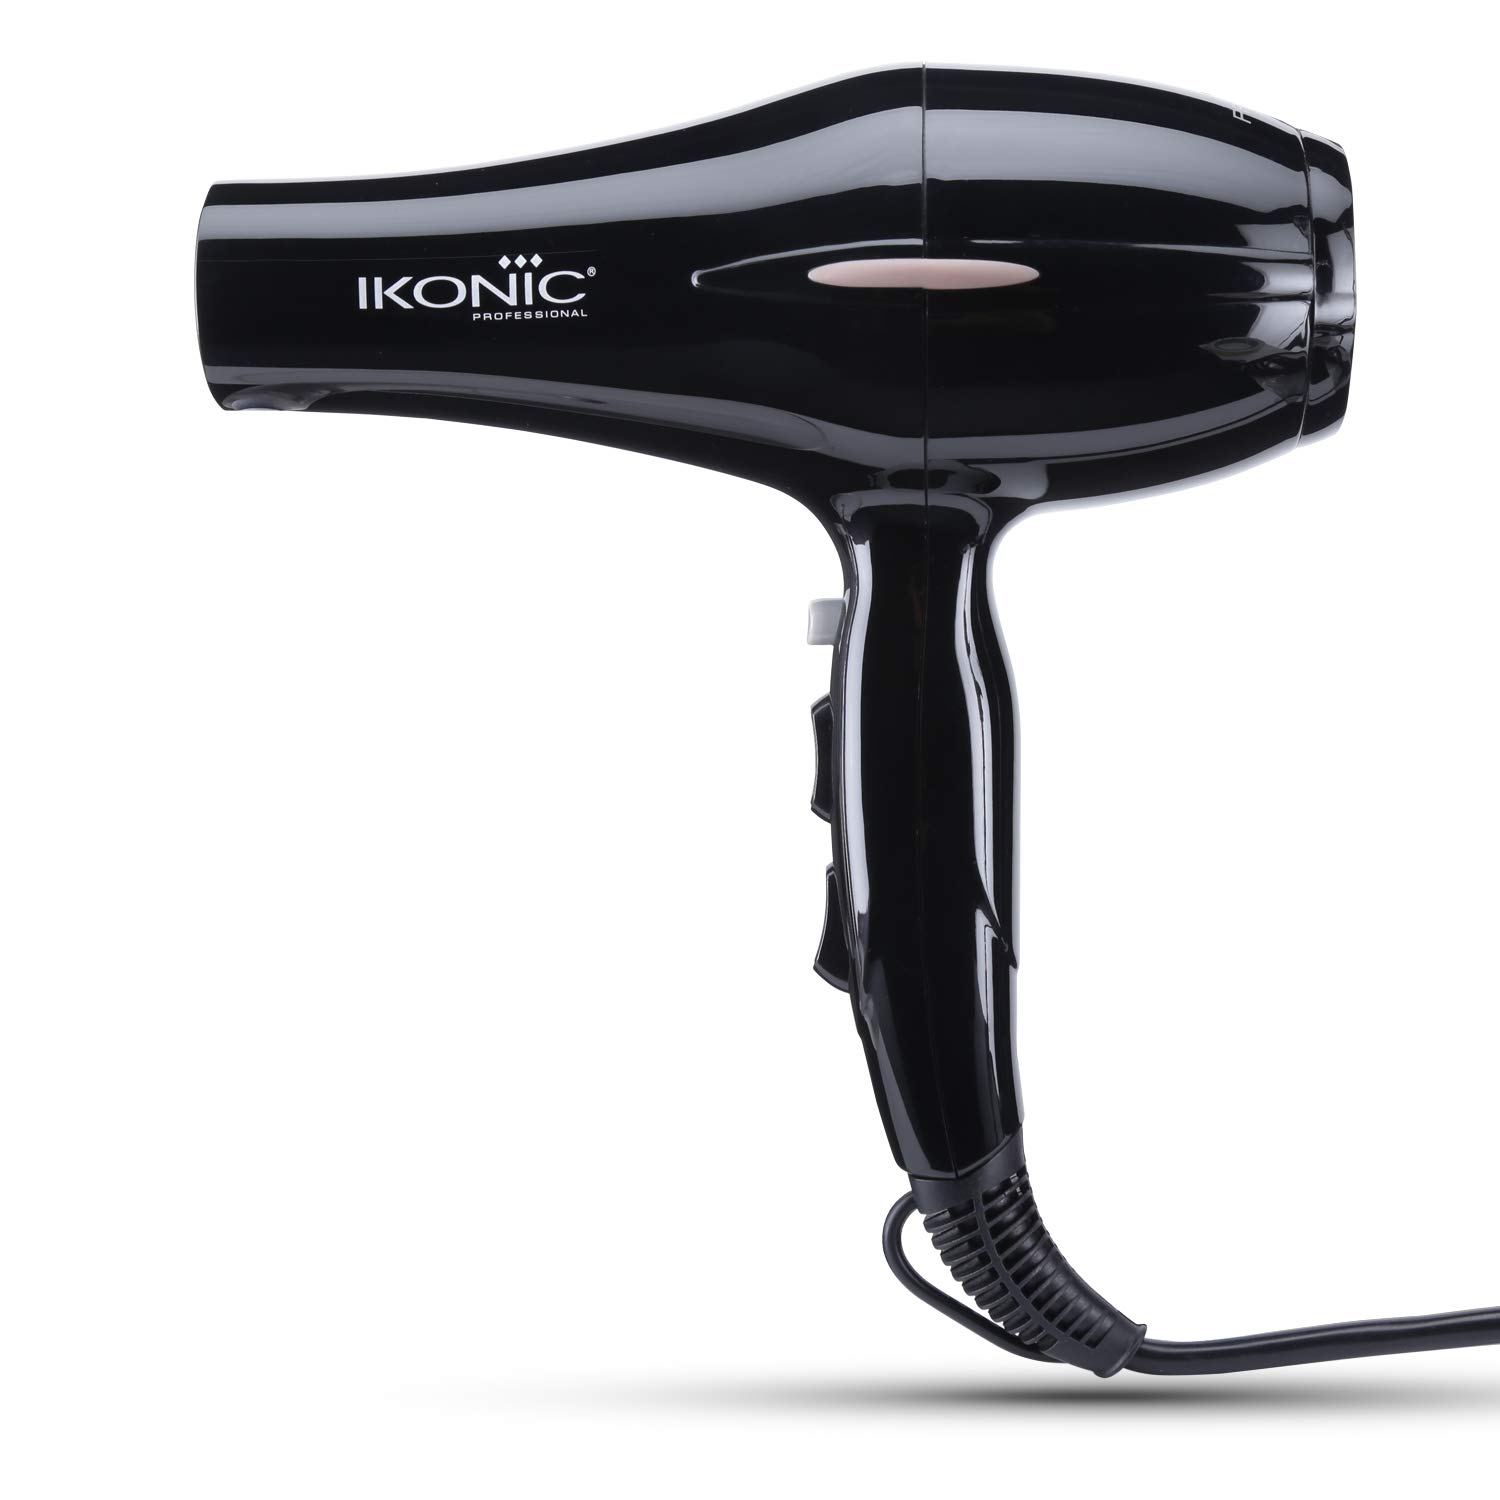 ikonic hair dryer price under 3k